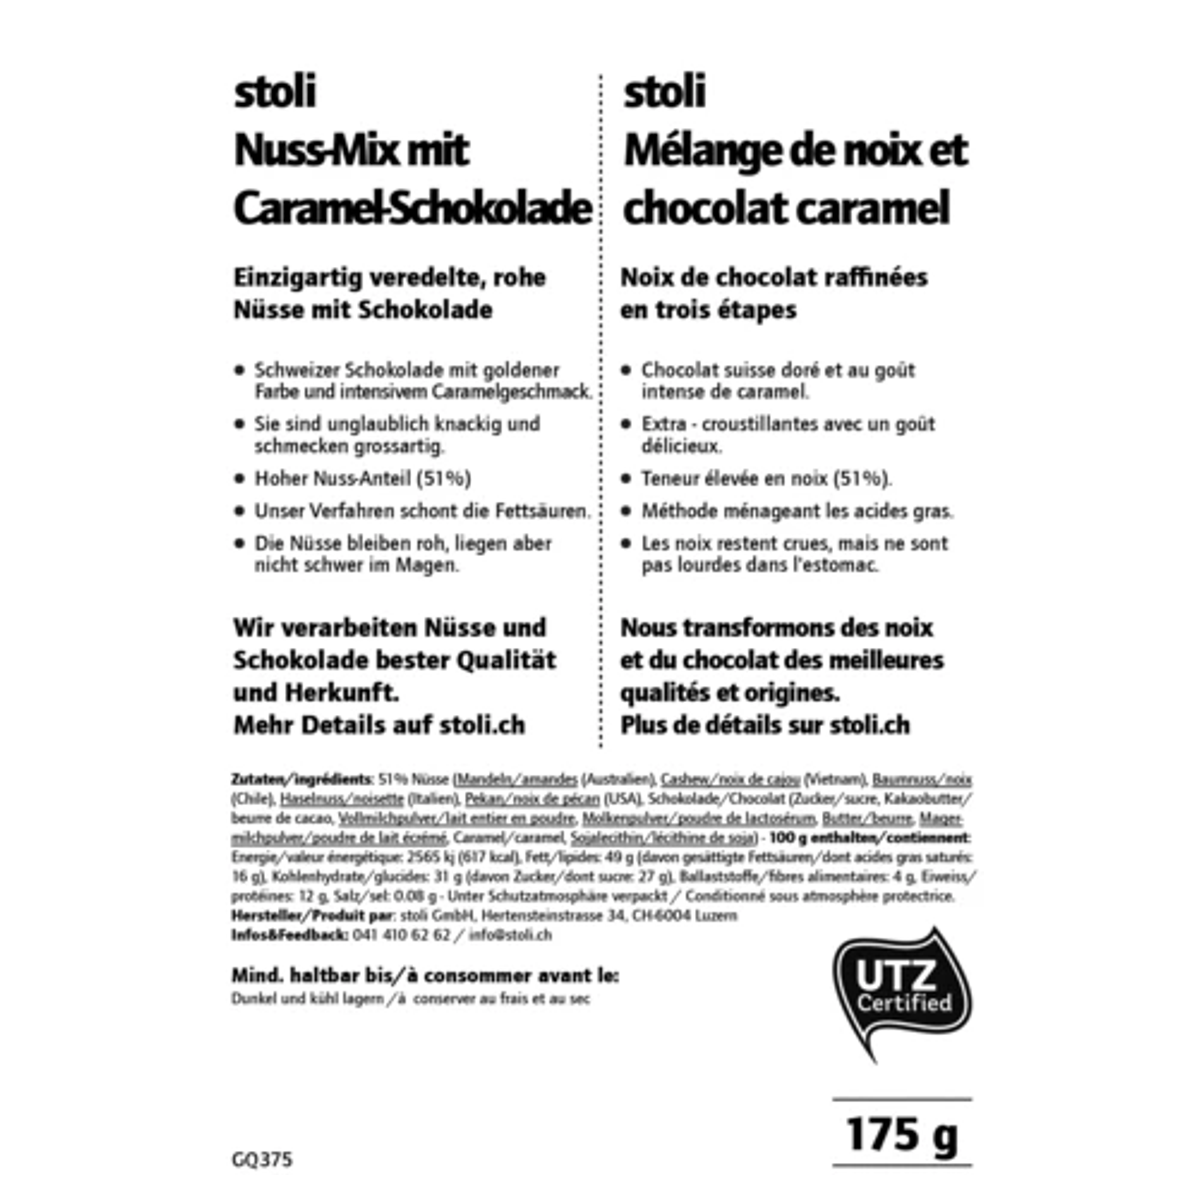 Stoli_Nuss_Mix_Caramel_Schokolade_online_kaufen